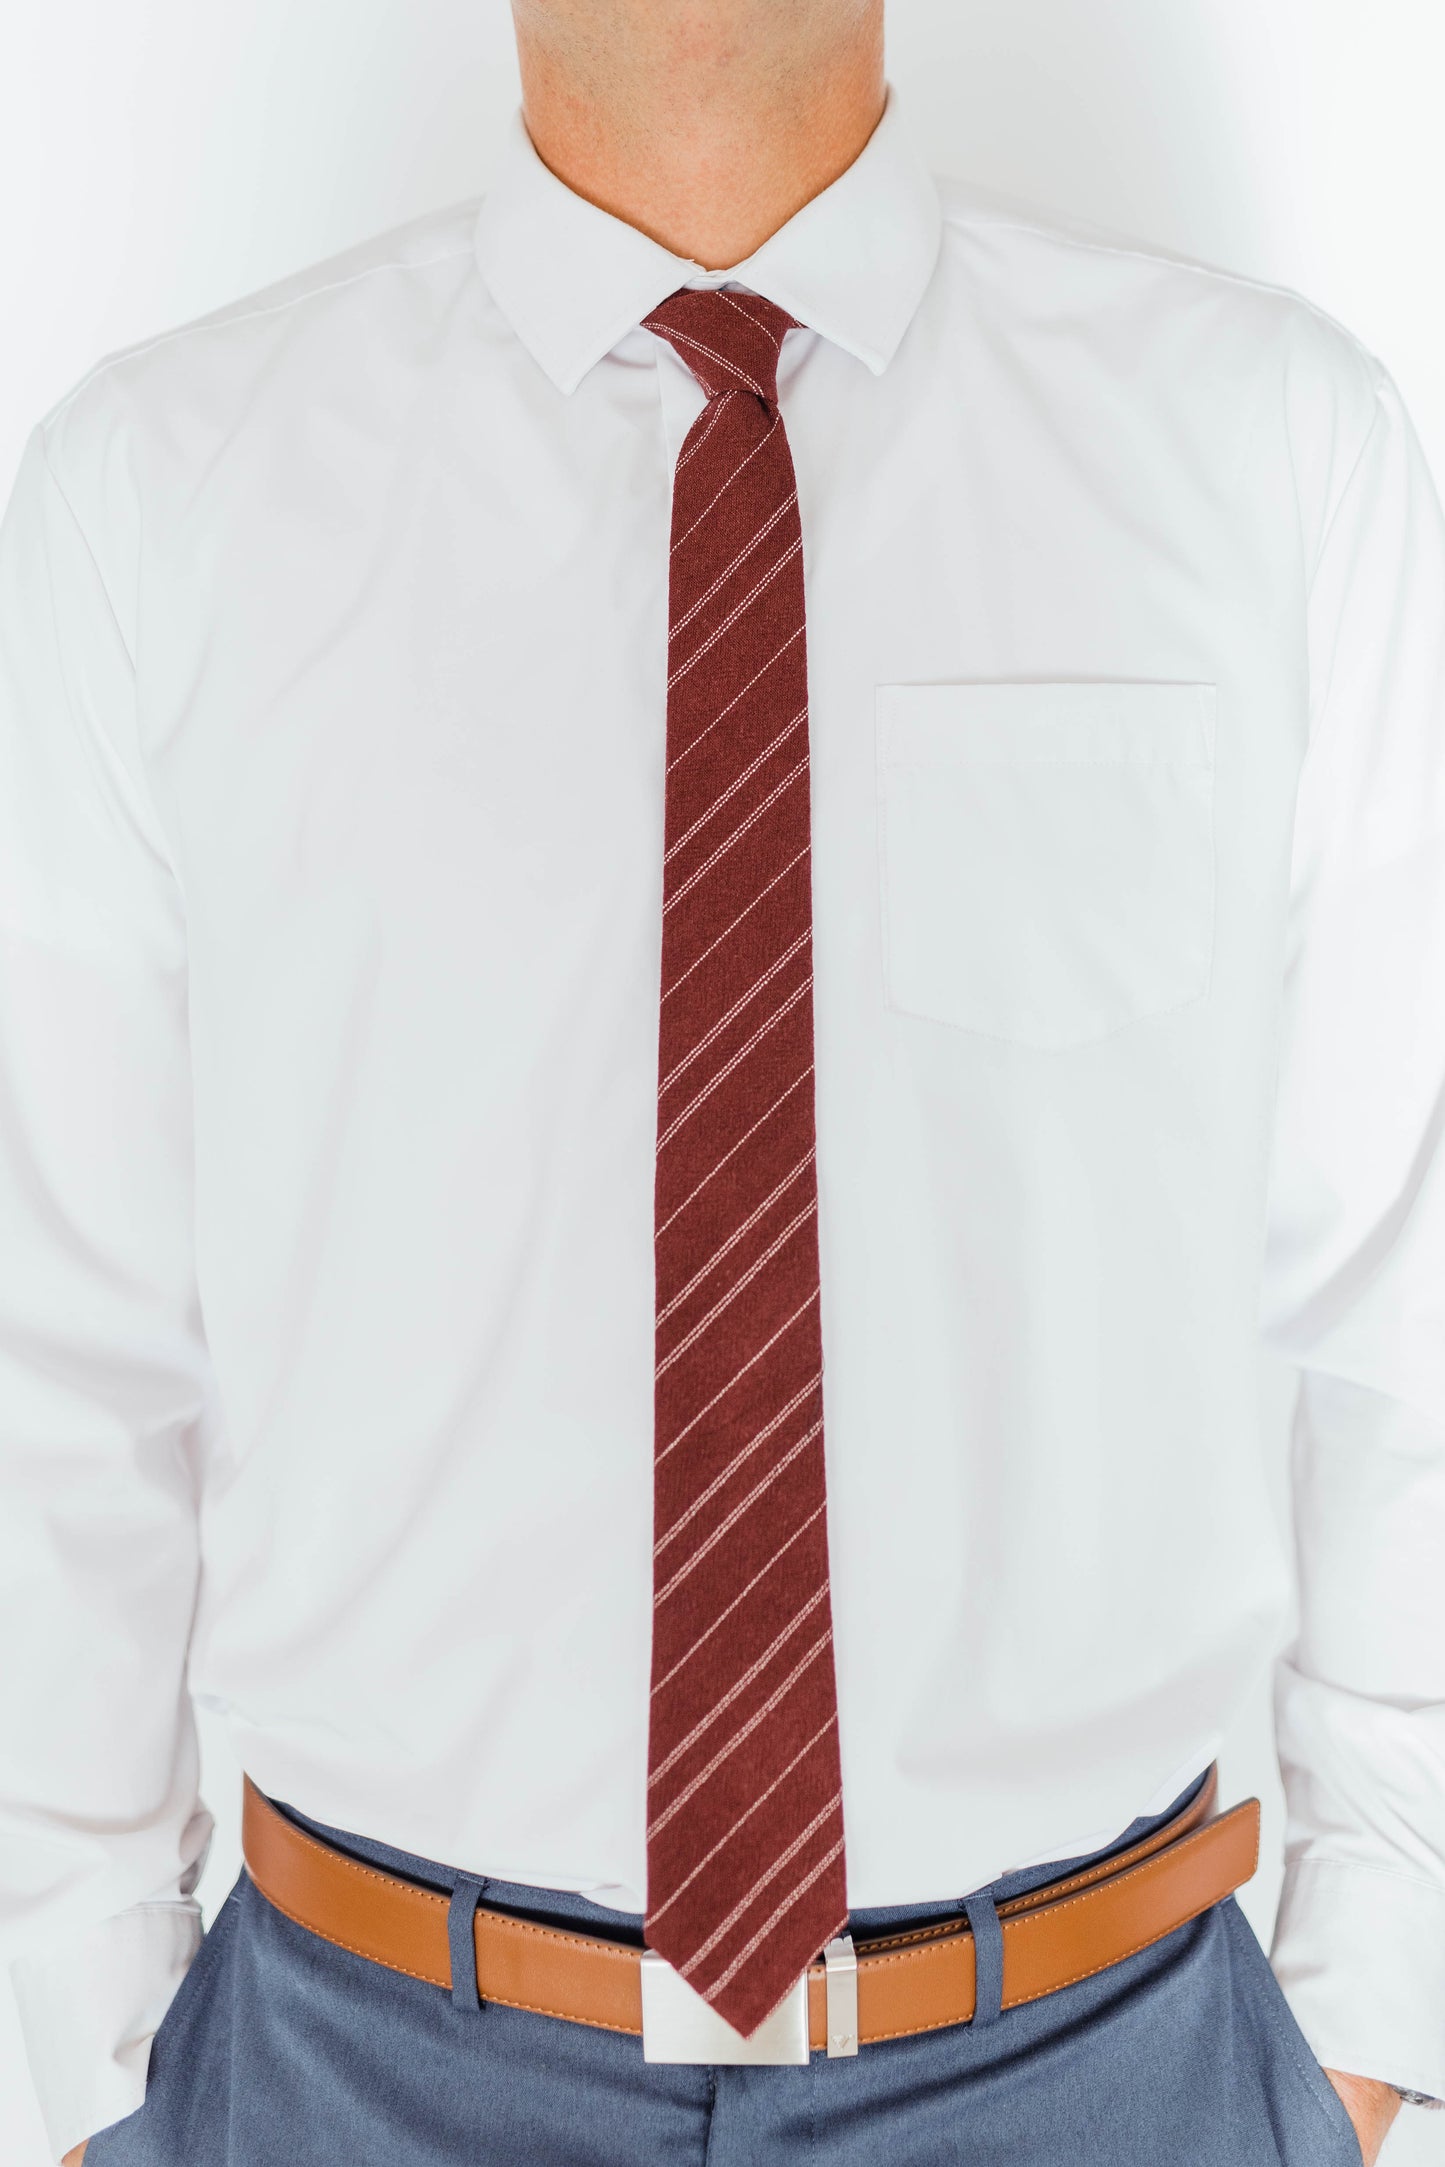 Maroon Stripe Tie